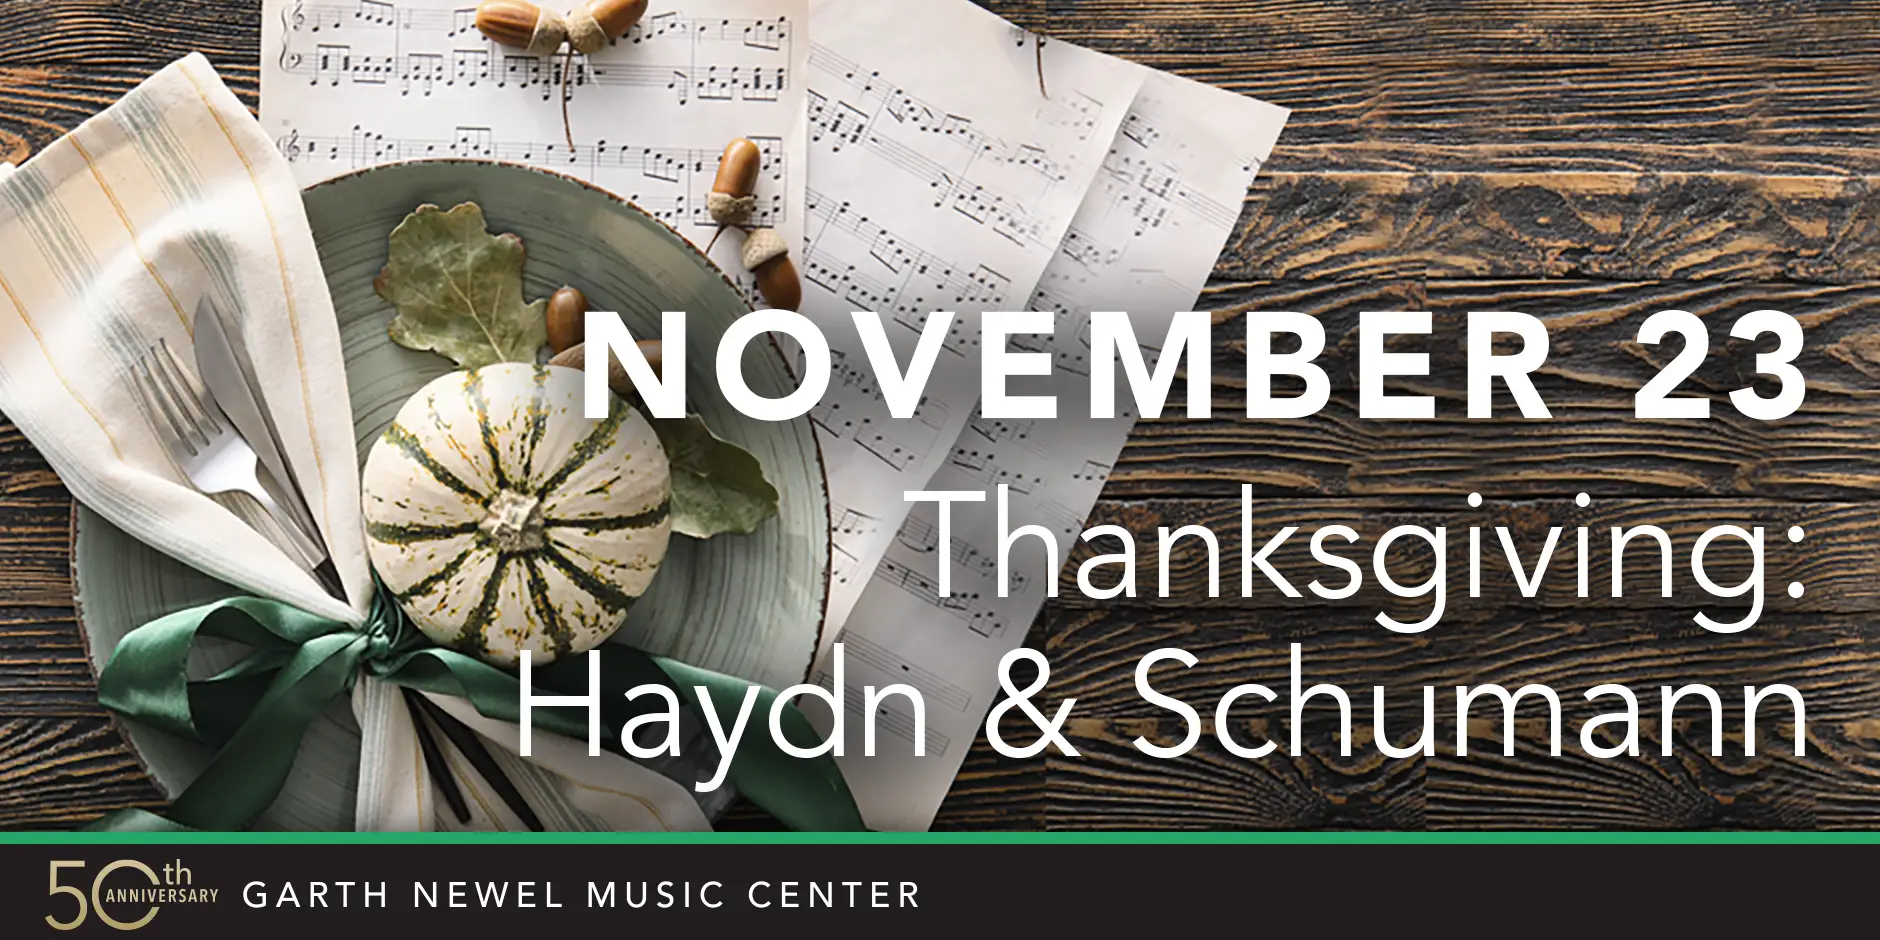 November 23 - Thanksgiving: Haydn & Schumann